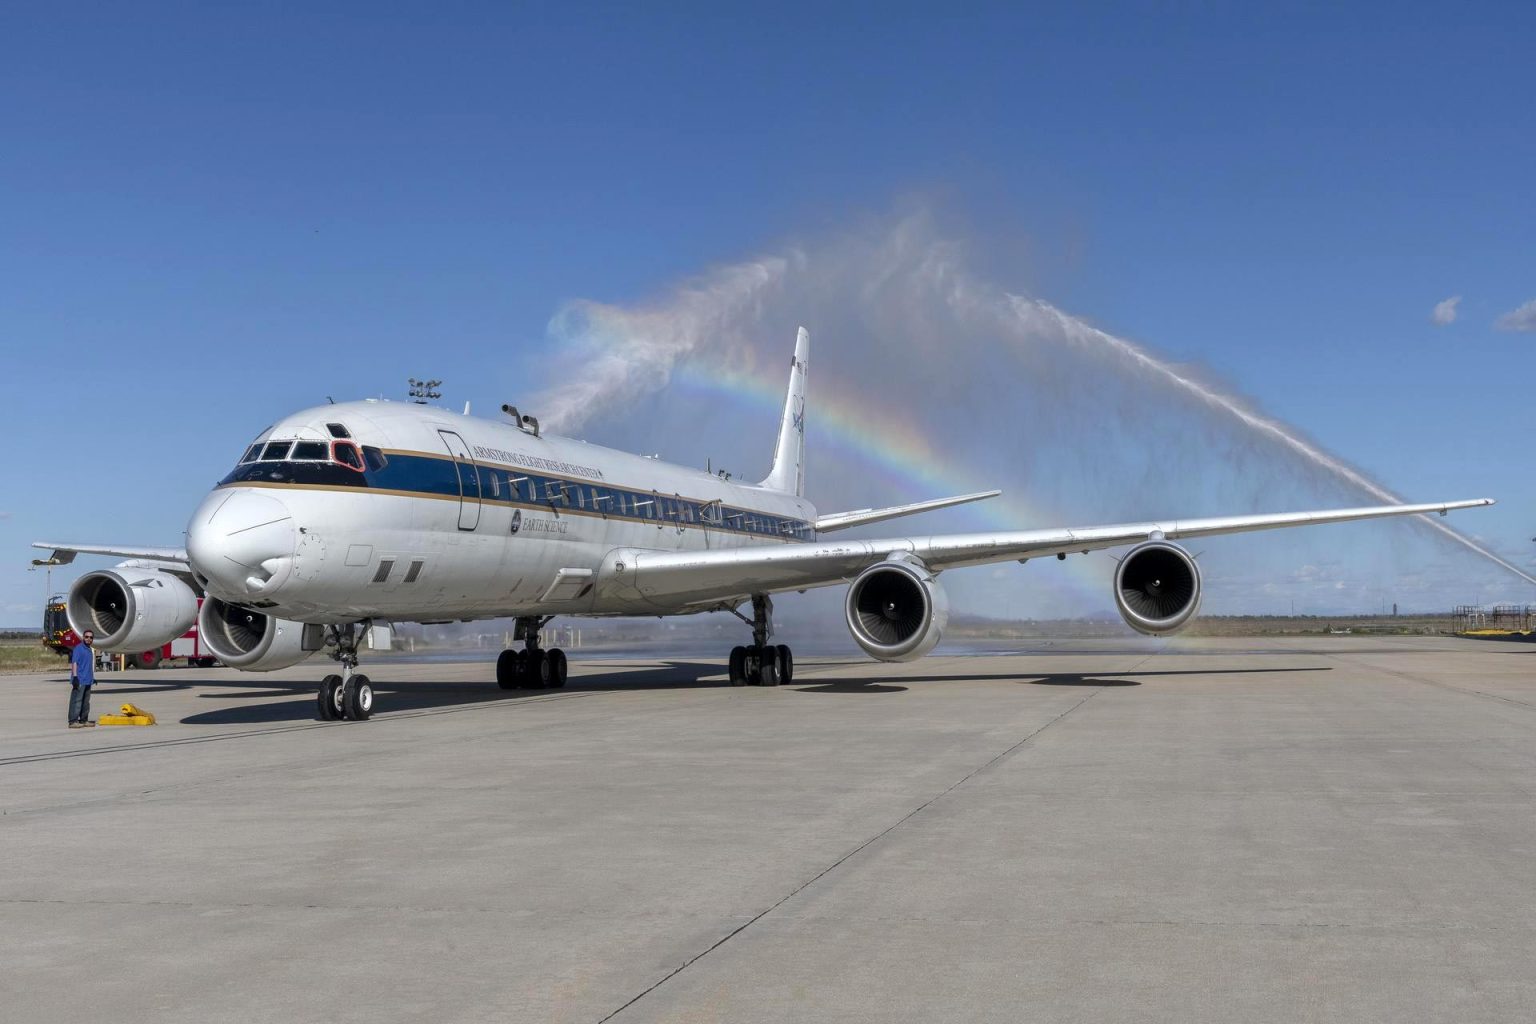 नासा के DC-8 ने स्ट्रैटोस्फियर को विदाई दी और कक्षा को नमस्कार किया